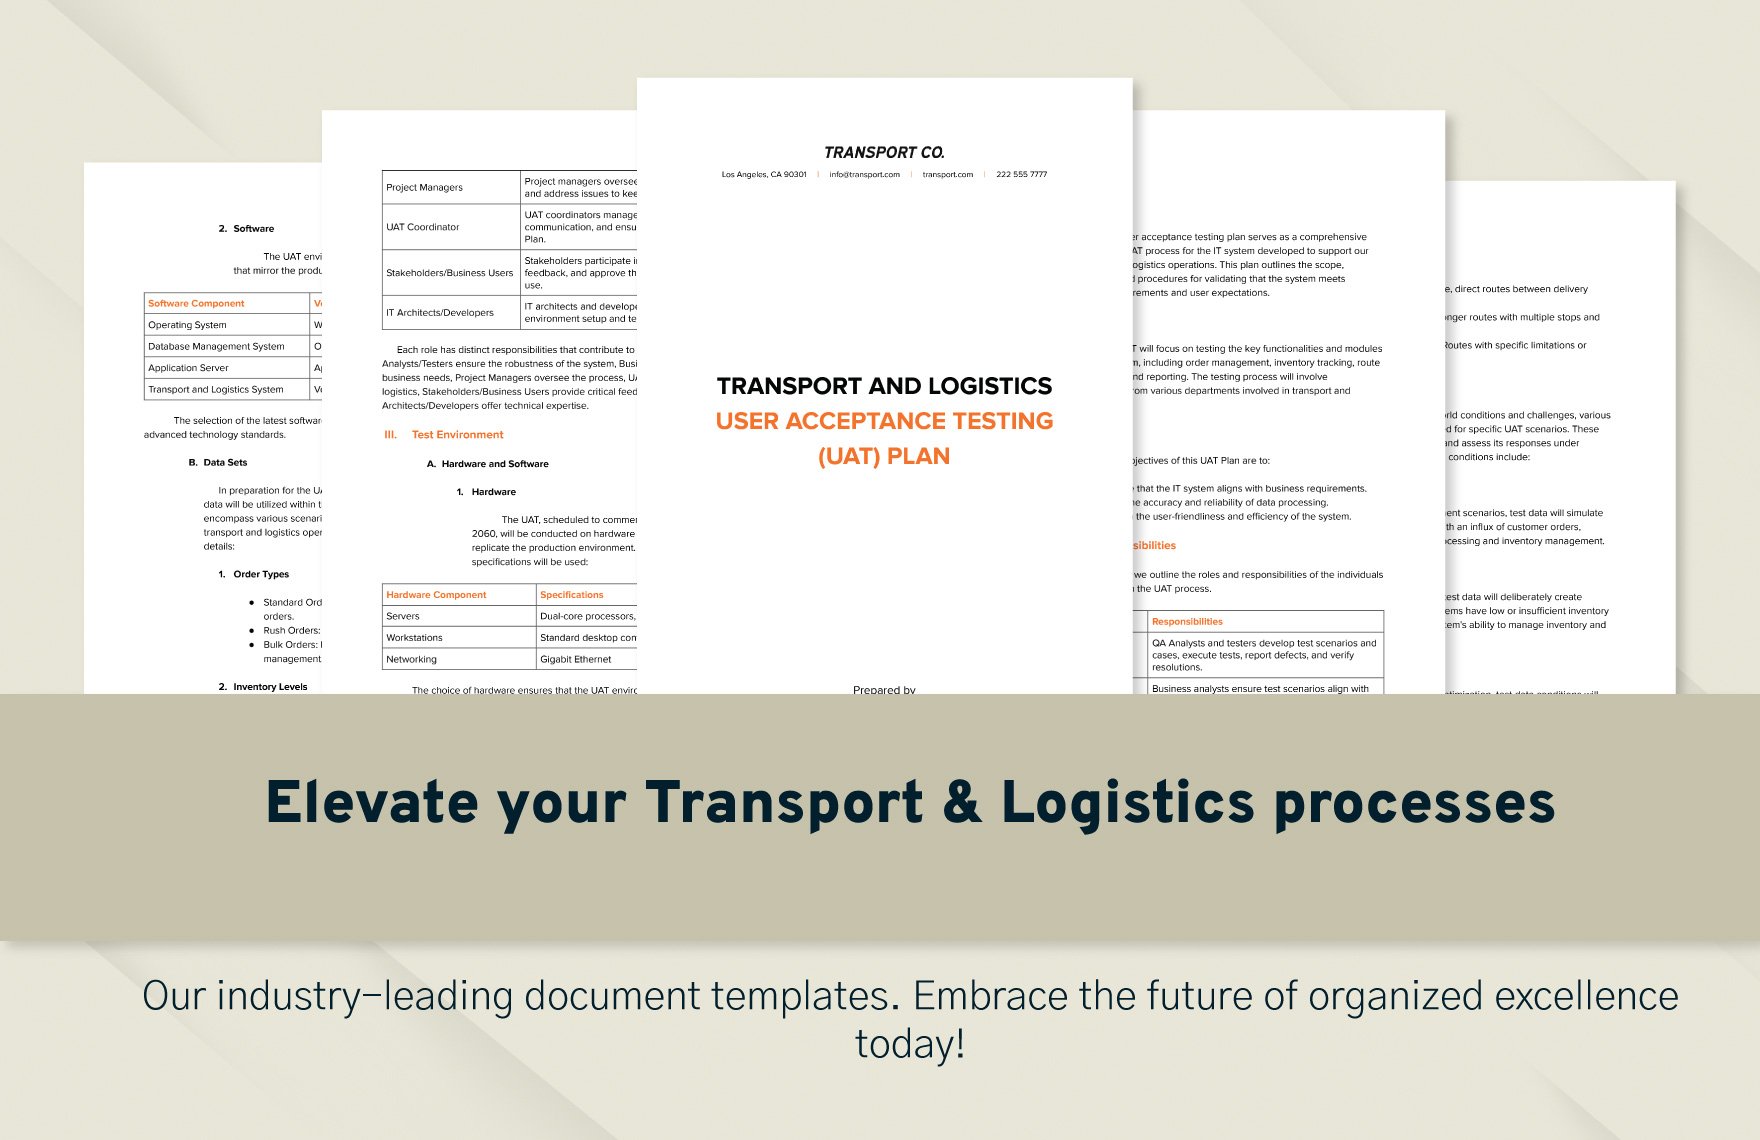 Transport and Logistics User Acceptance Testing (UAT) Plan Template